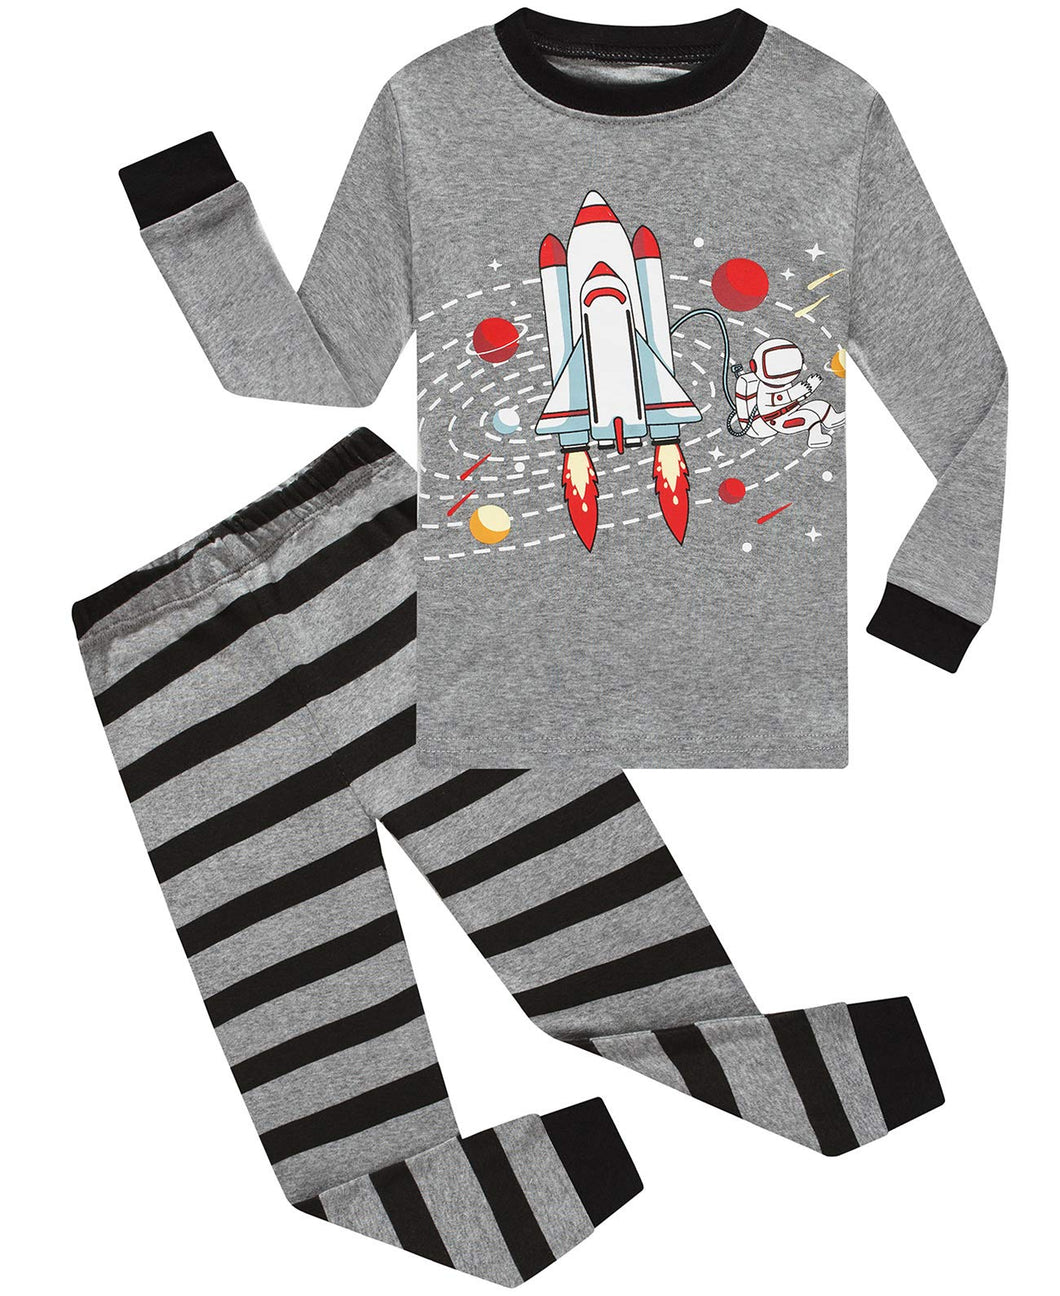 Boys Pajamas Long Sleeve 100% Cotton Toddler Pjs Kids Rocket Clothes Pants Set 4T Gray